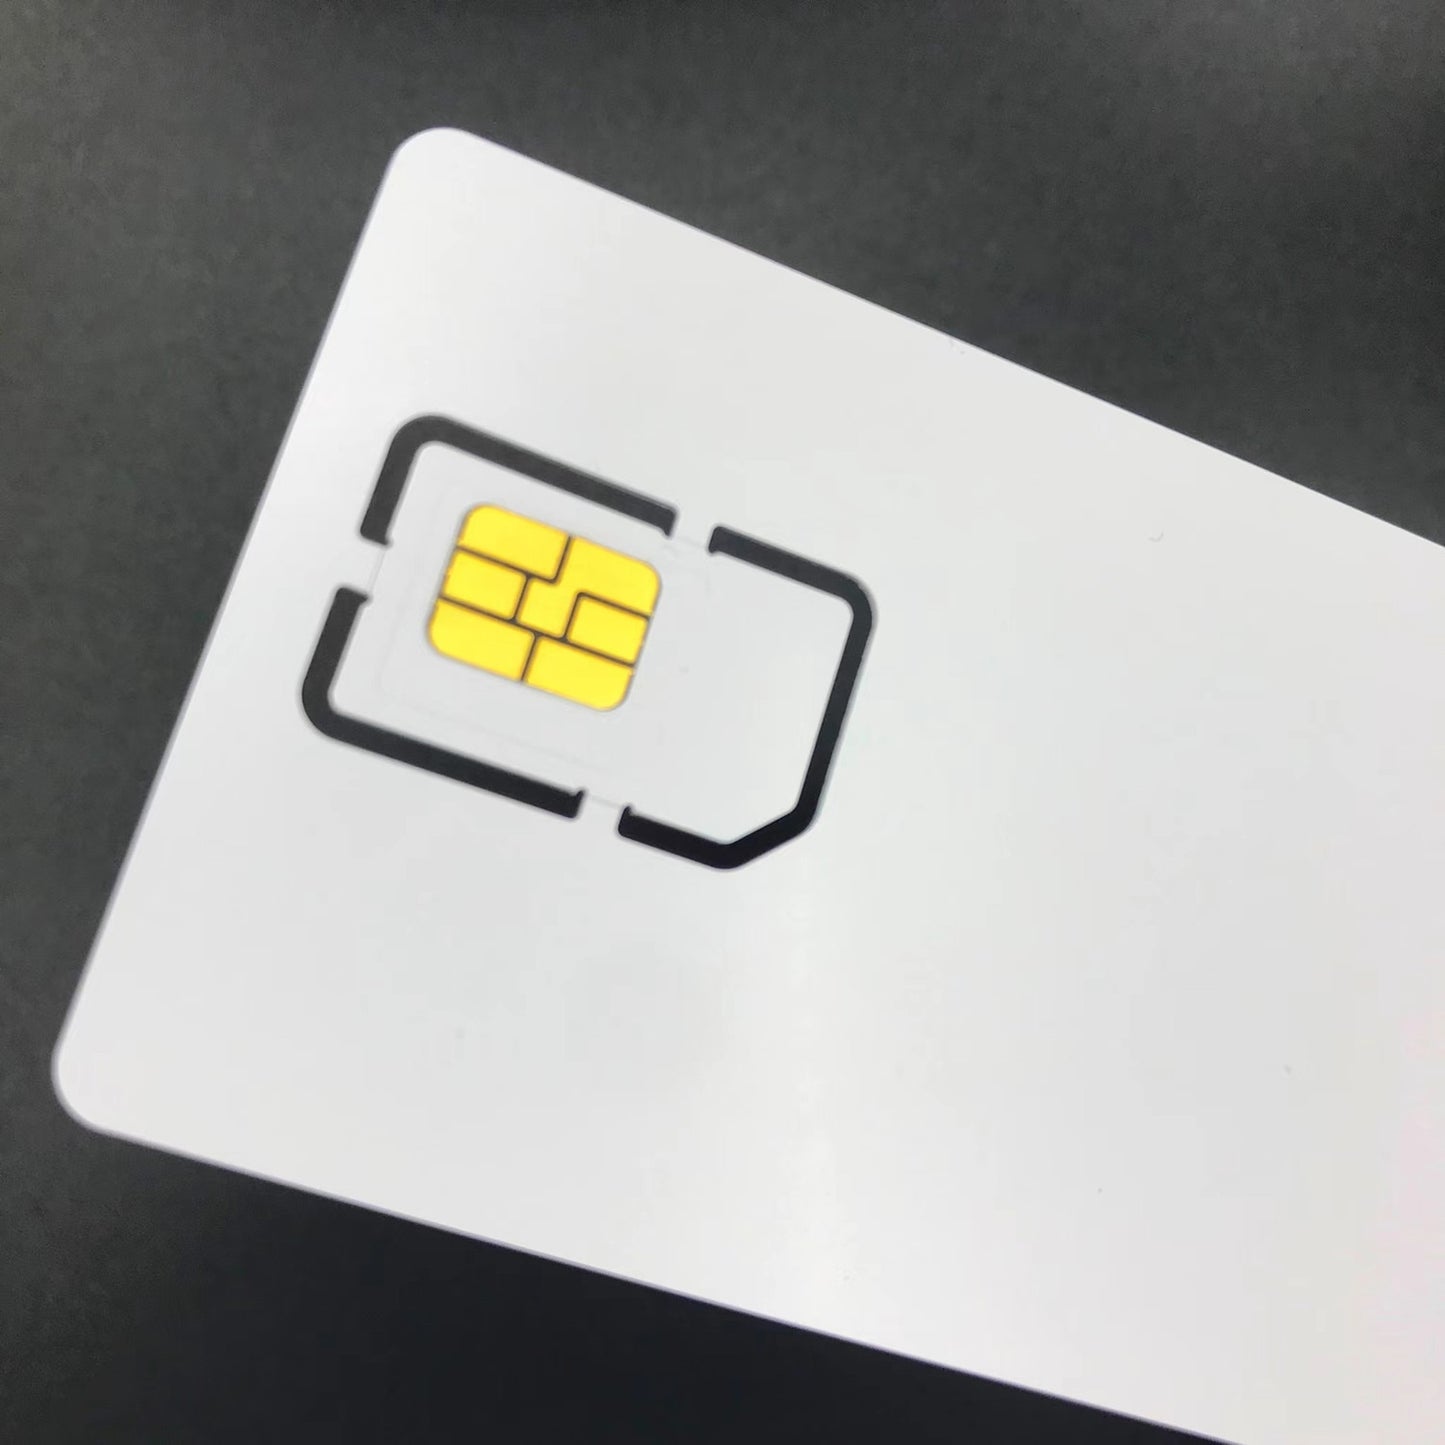 OYEITIMES 4G LTE Test SIM Card Support Double Milenage And XOR Algorithms Test SIM Card Mini,Micro and Nano Blank Test SIM Card